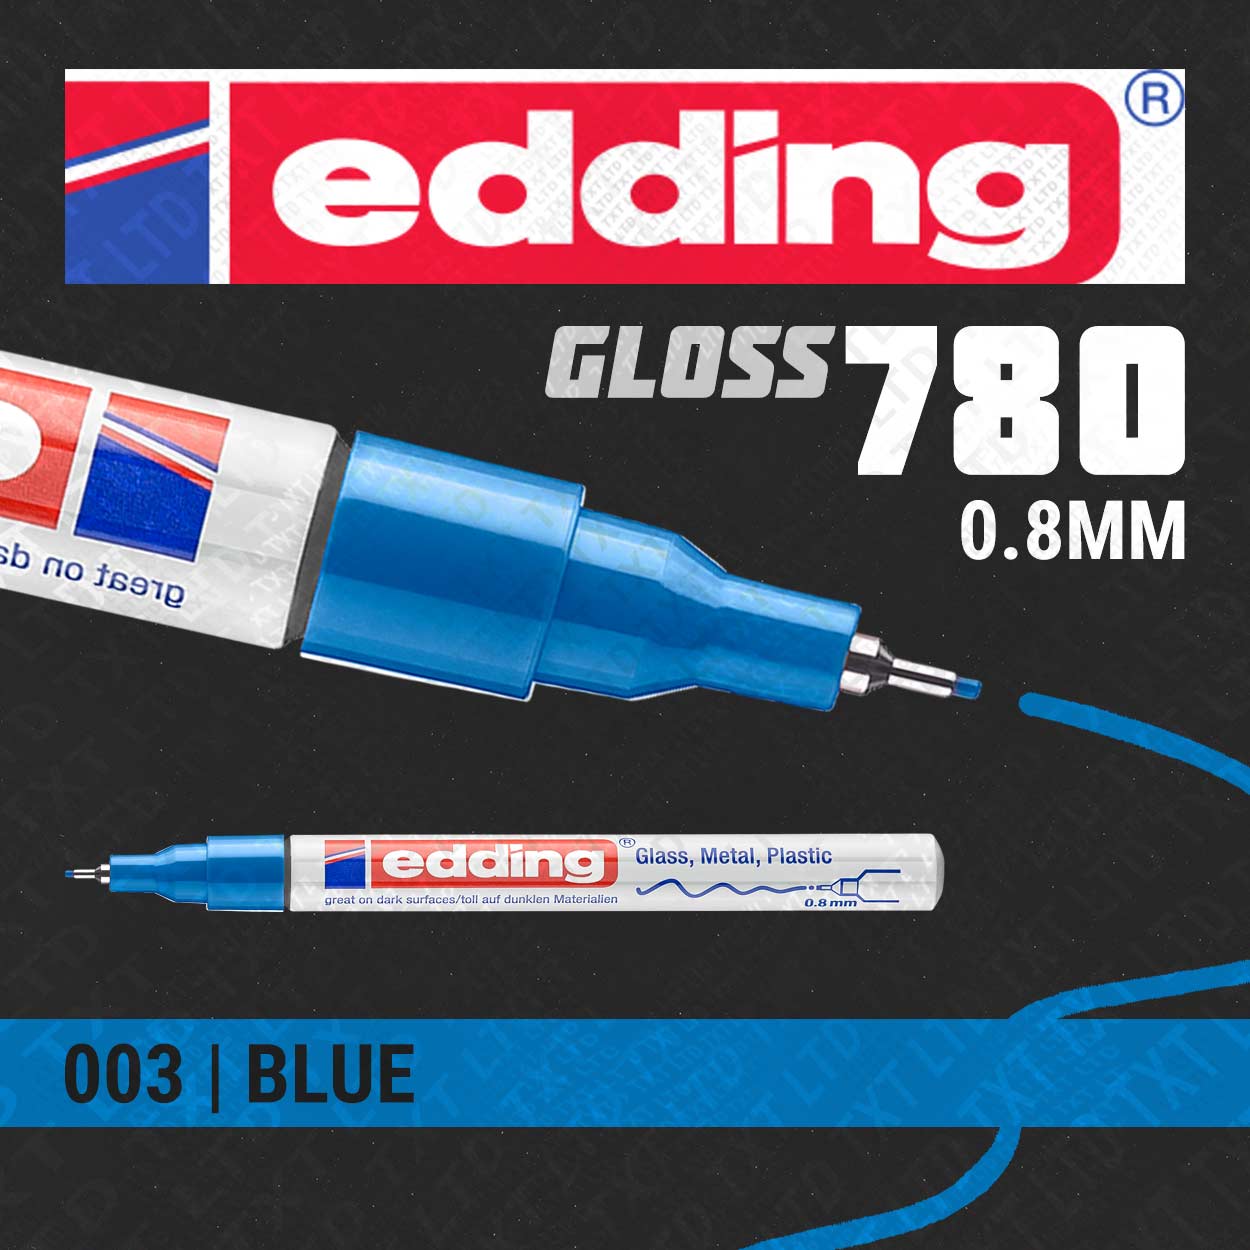 edding 780 Gloss Paint Marker 0.8mm